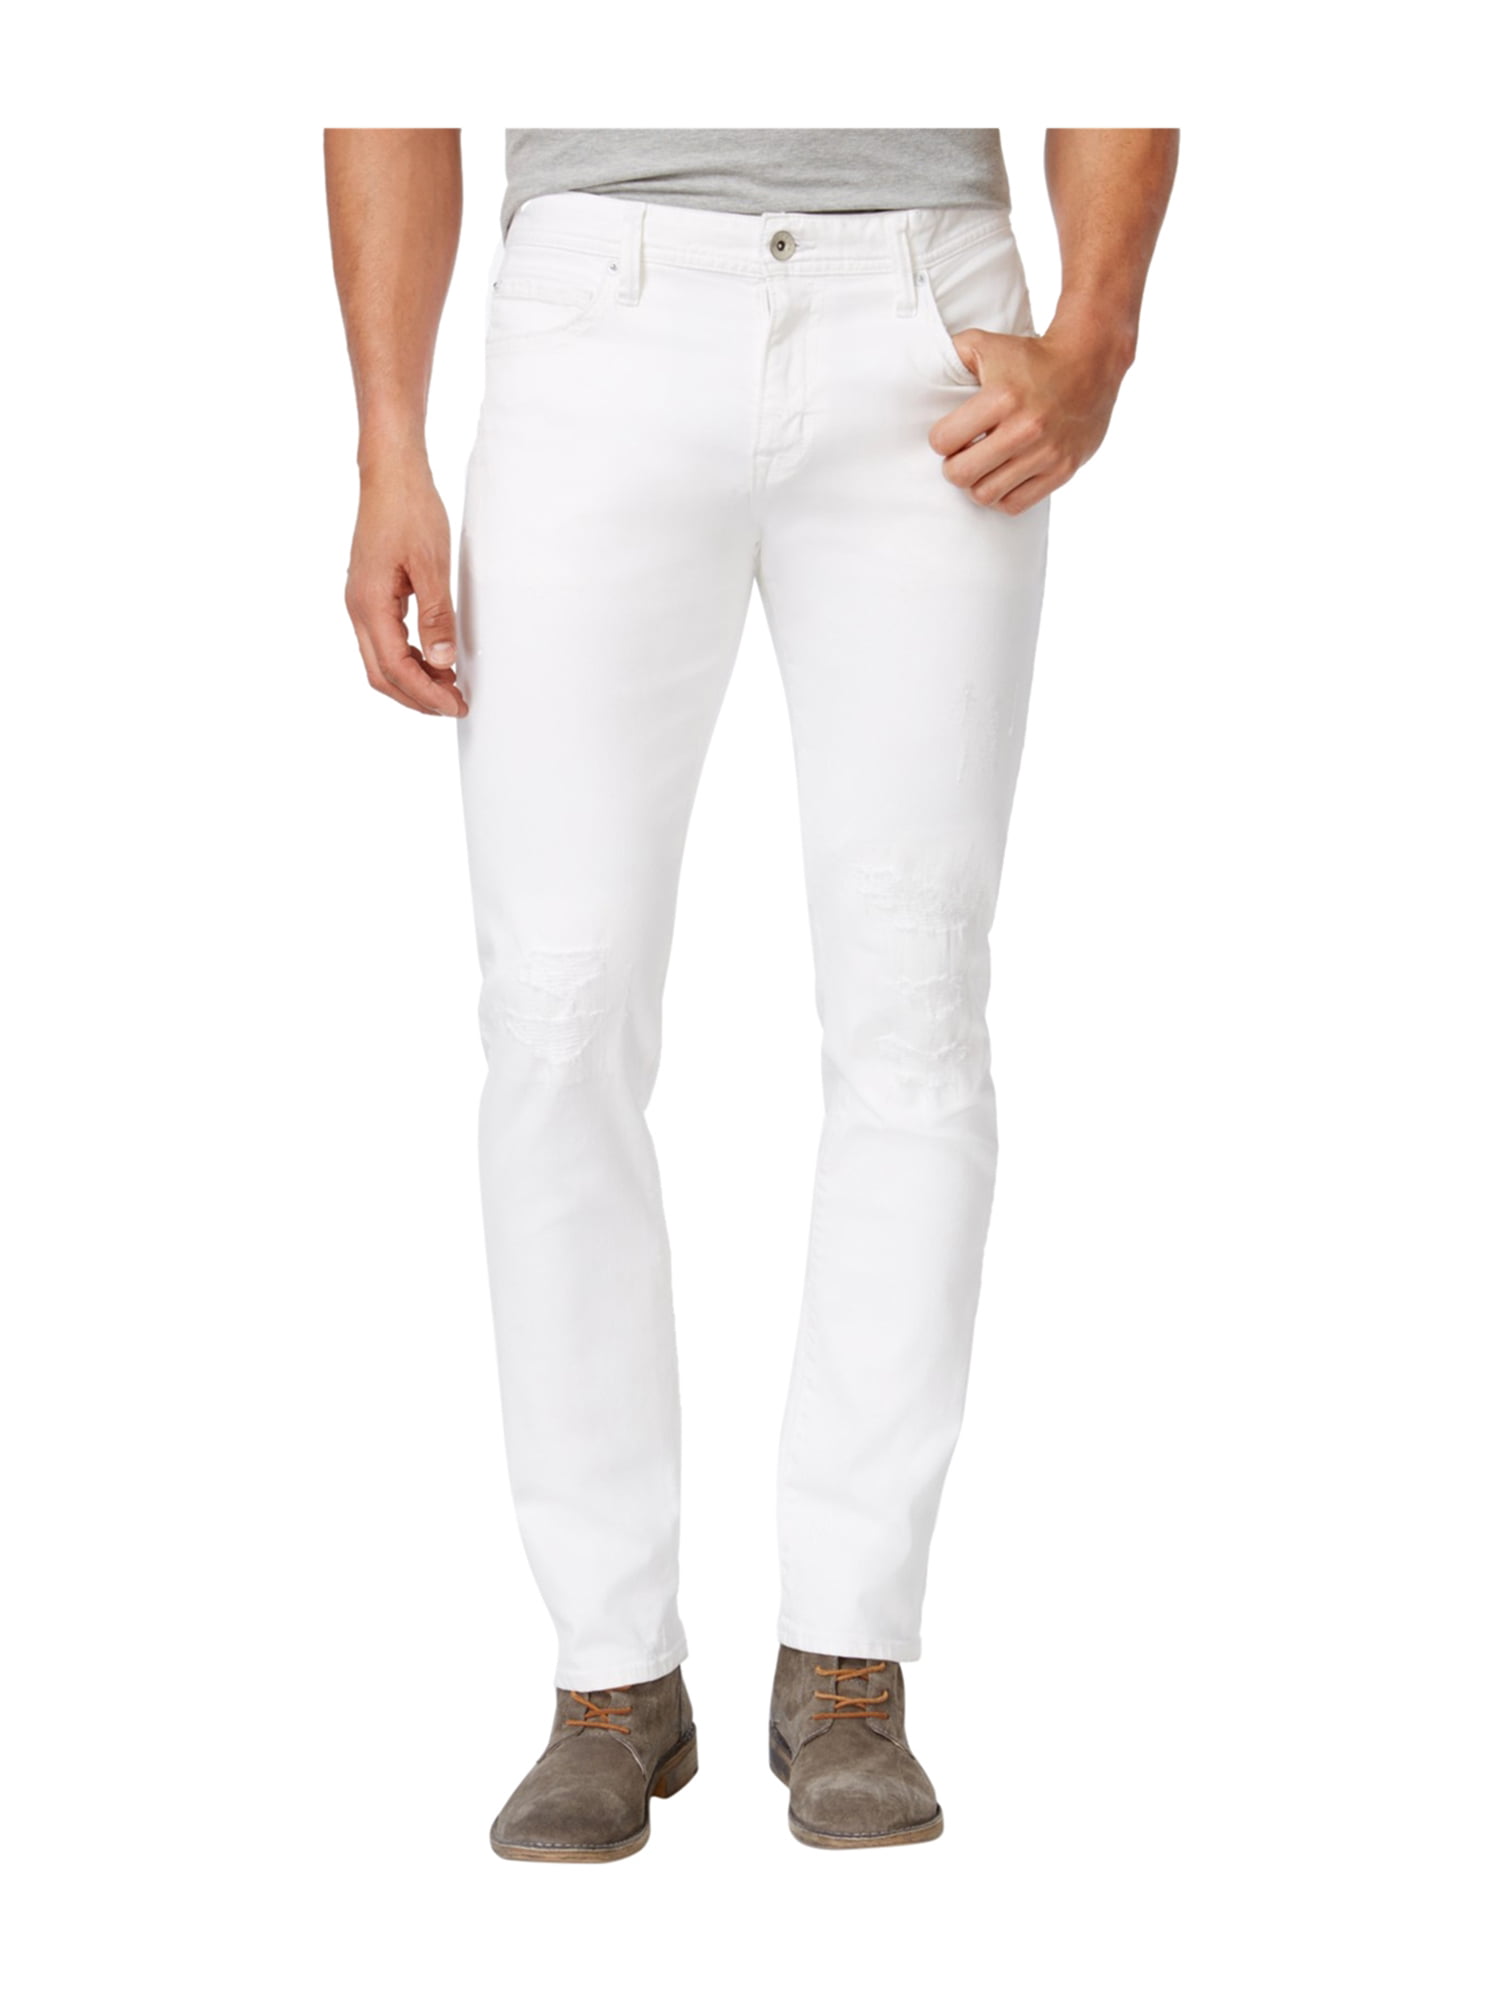 William Rast Mens Solid Slim Fit Jeans white 31x30 | Walmart Canada